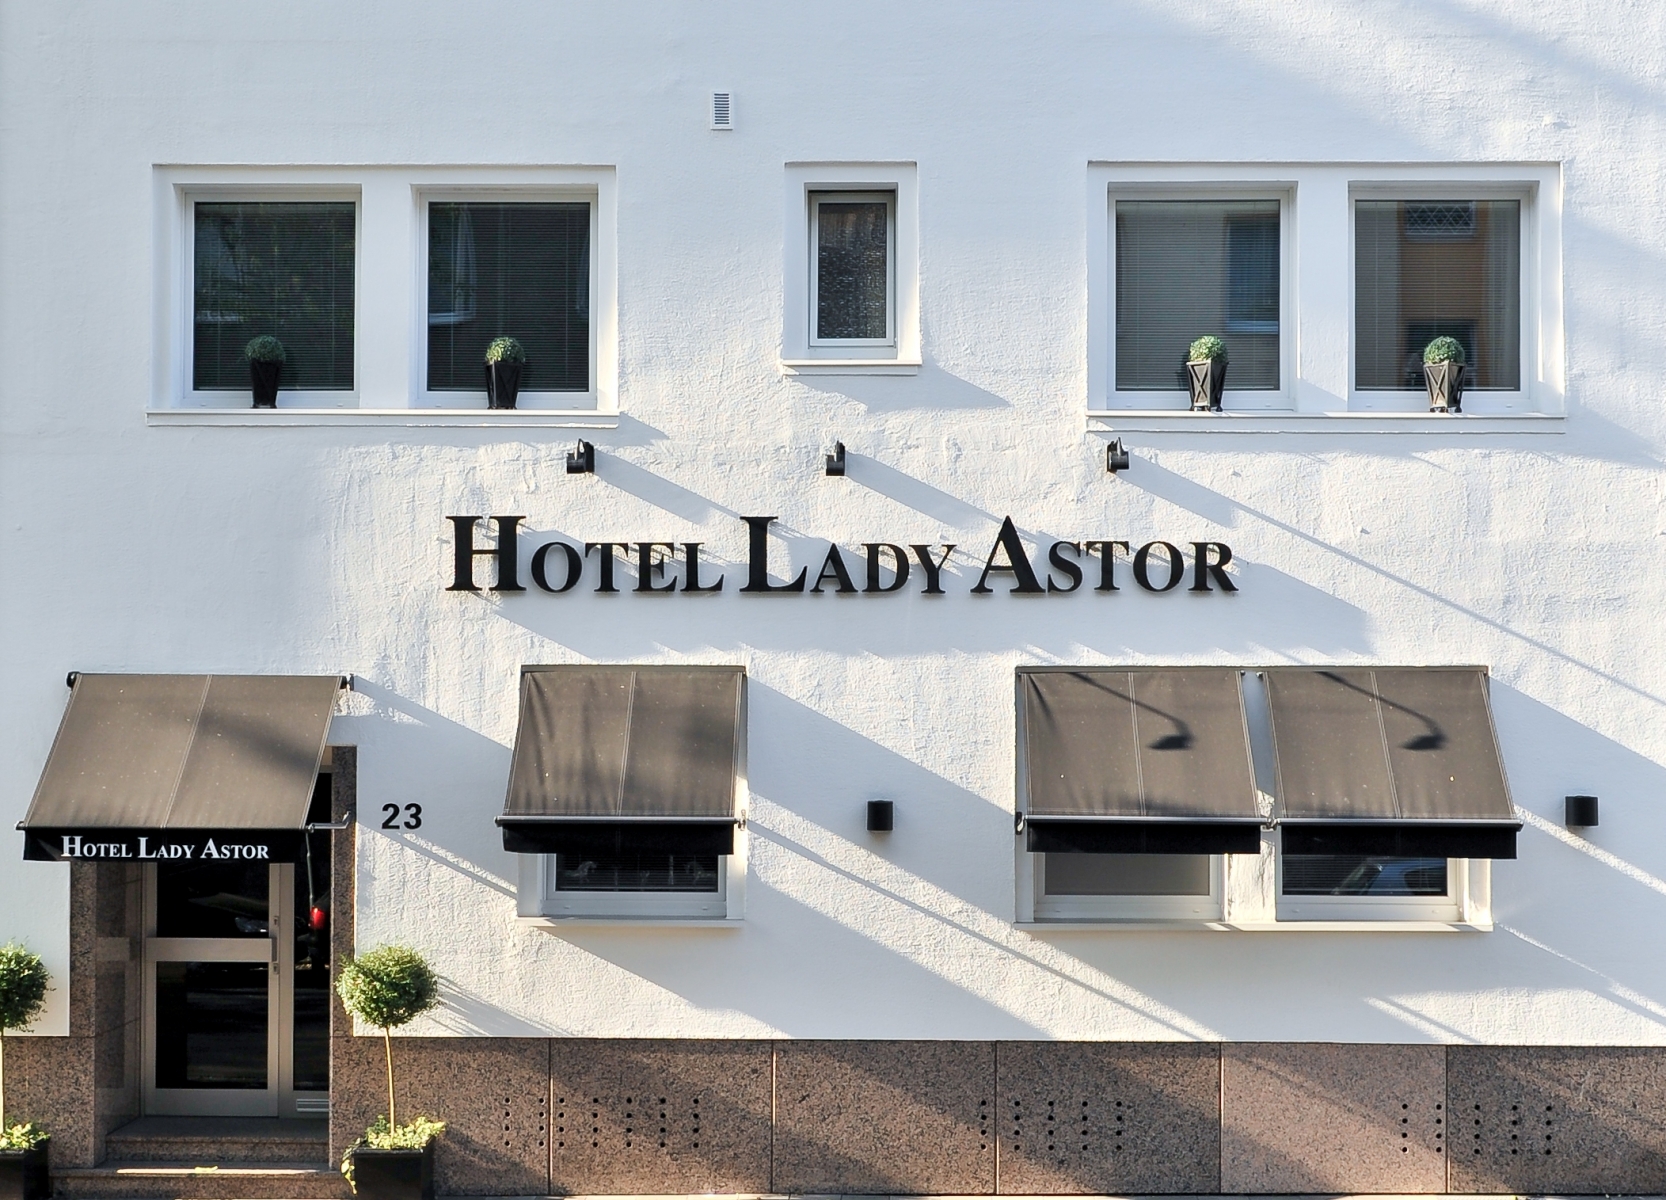 Hotel Sir & Lady Astor <br/>60.00 ew <br/> <a href='http://vakantieoplossing.nl/outpage/?id=62c88b5e98e5b51dfc22fb0cb526792c' target='_blank'>View Details</a>